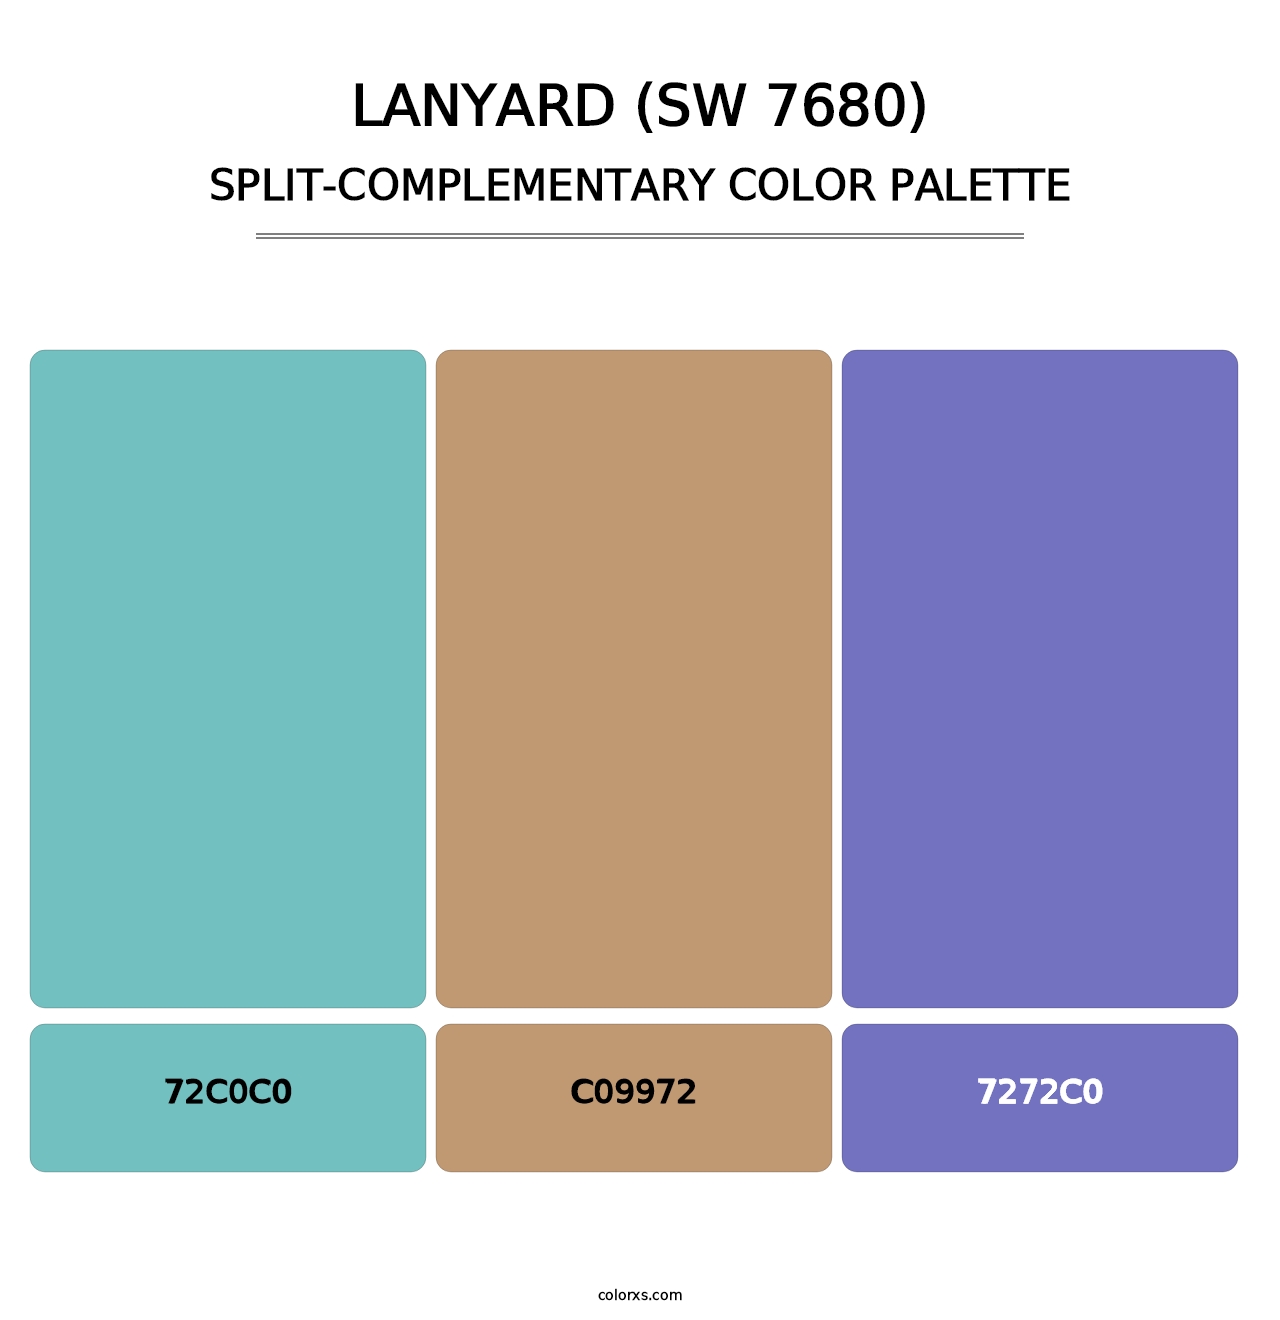 Lanyard (SW 7680) - Split-Complementary Color Palette